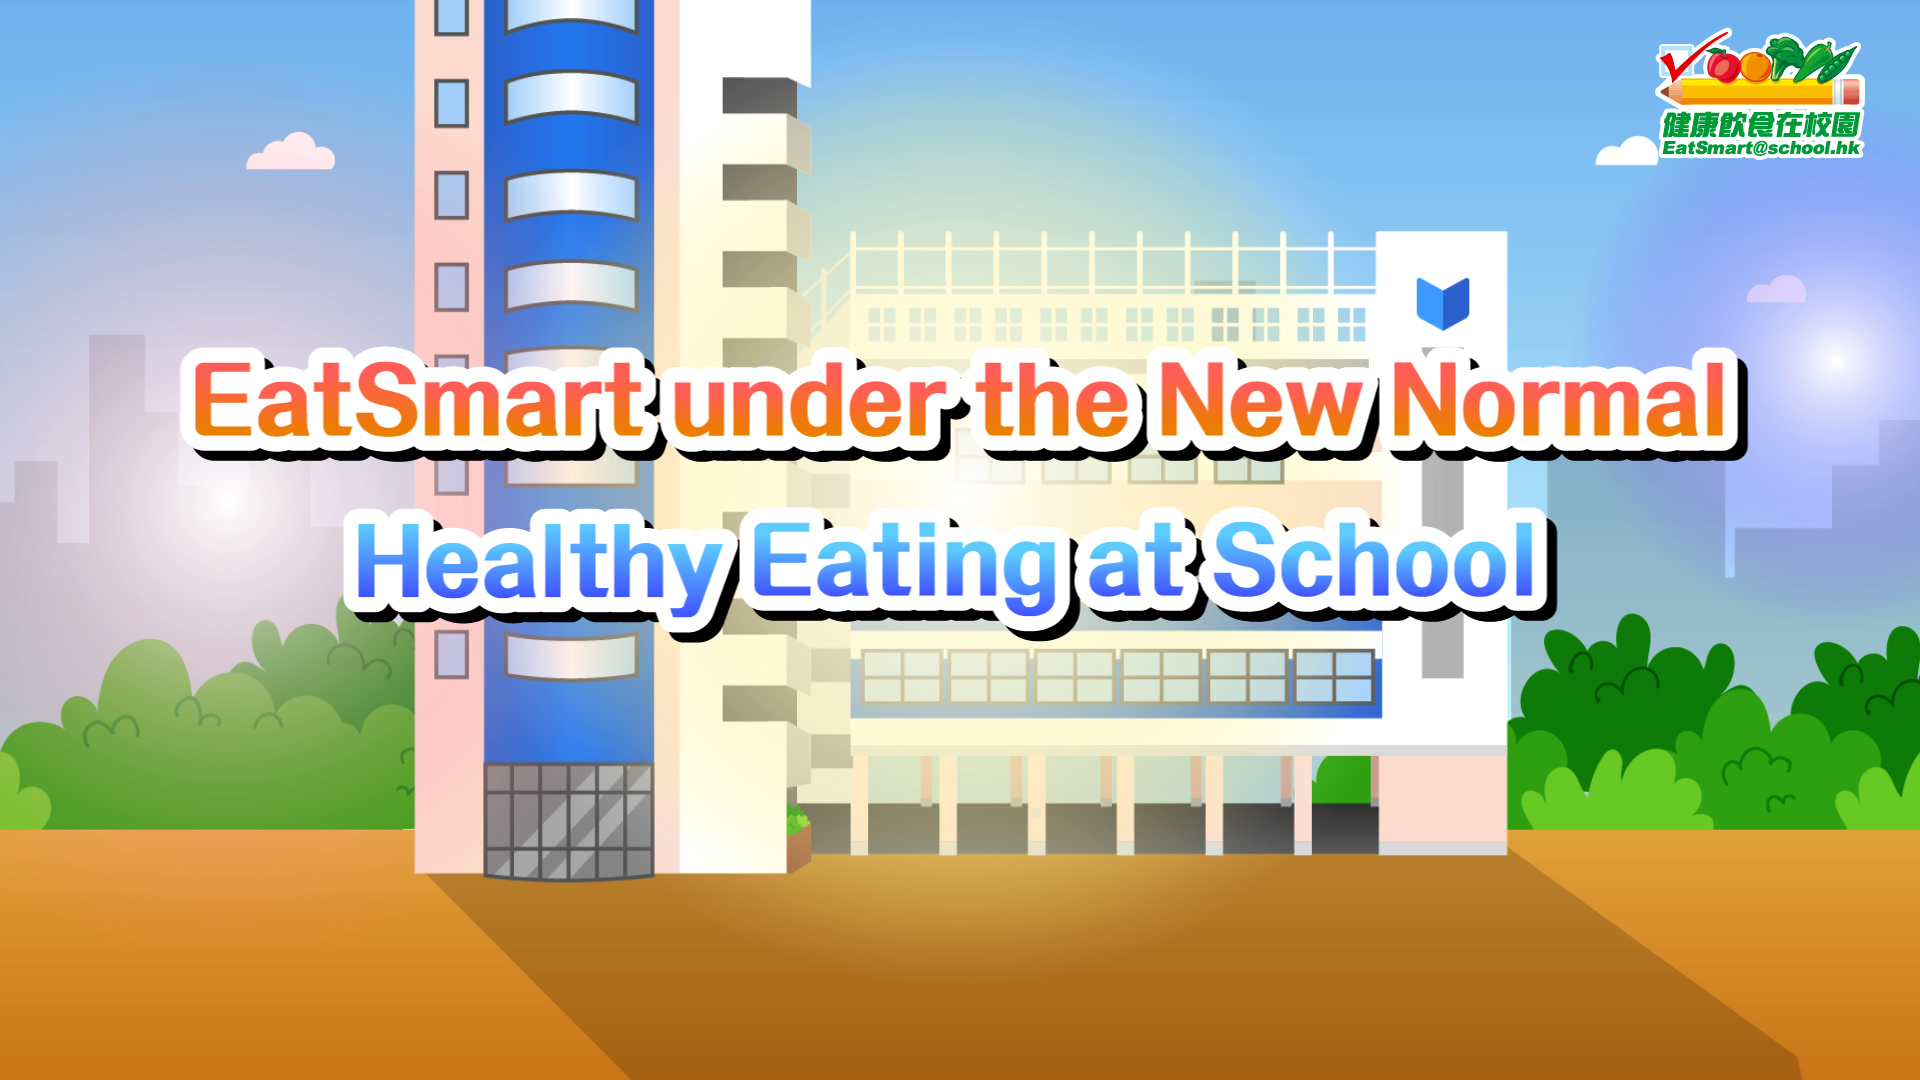 Part 3 - EatSmart under the New Normal - Healthy Eating at School